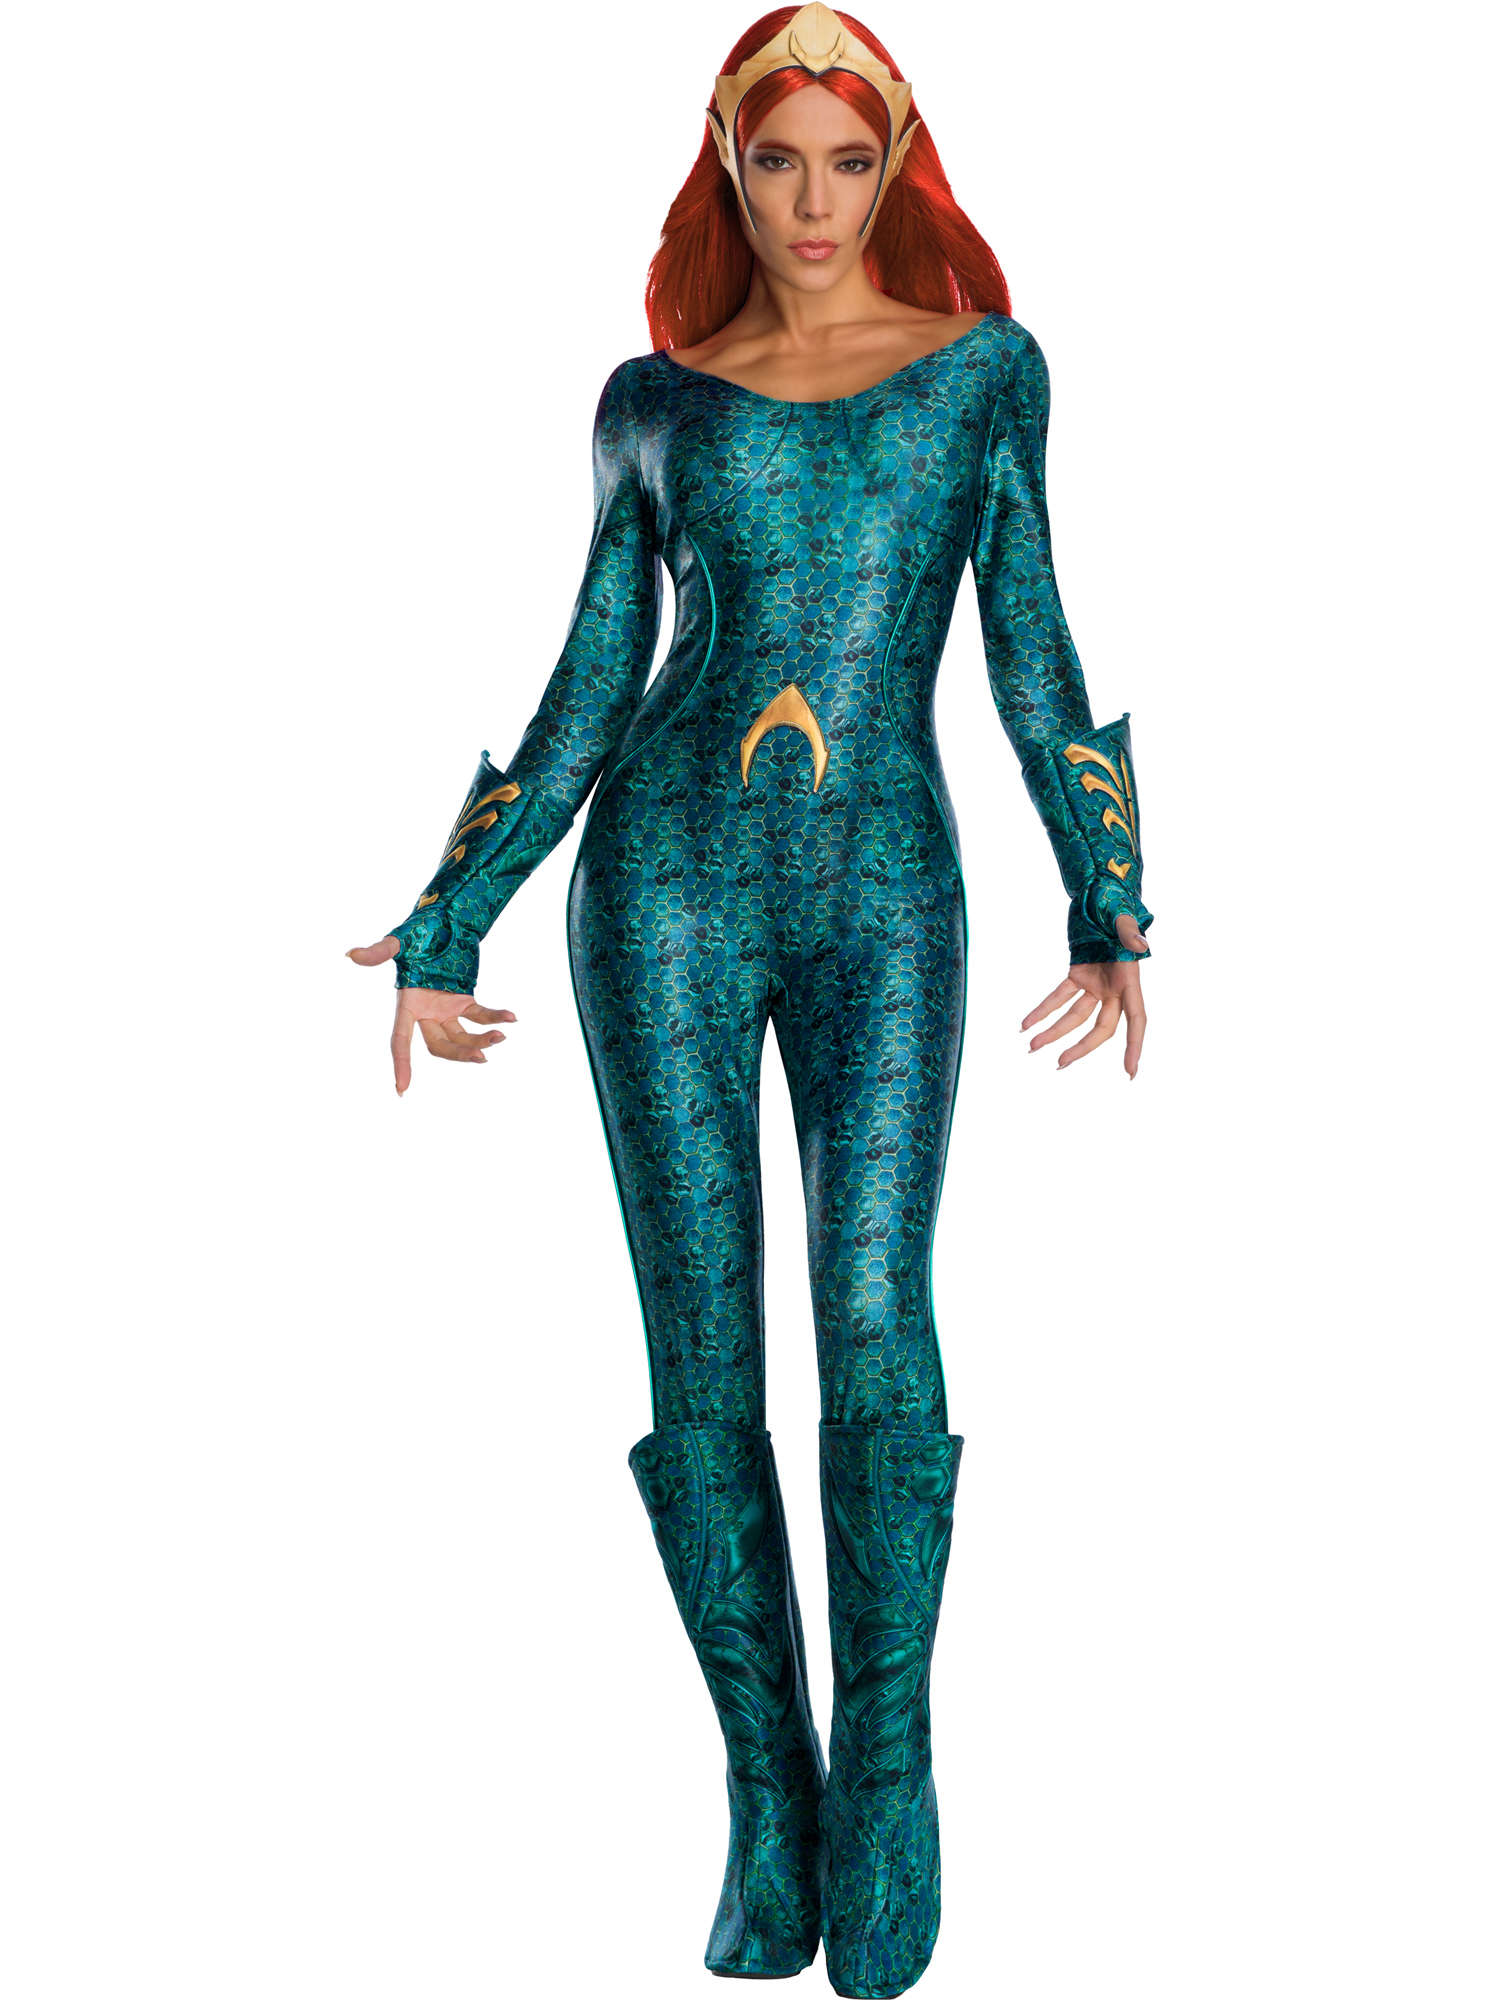 Mera, Aquaman, Multi, DC, Adult Costume, Small, Front